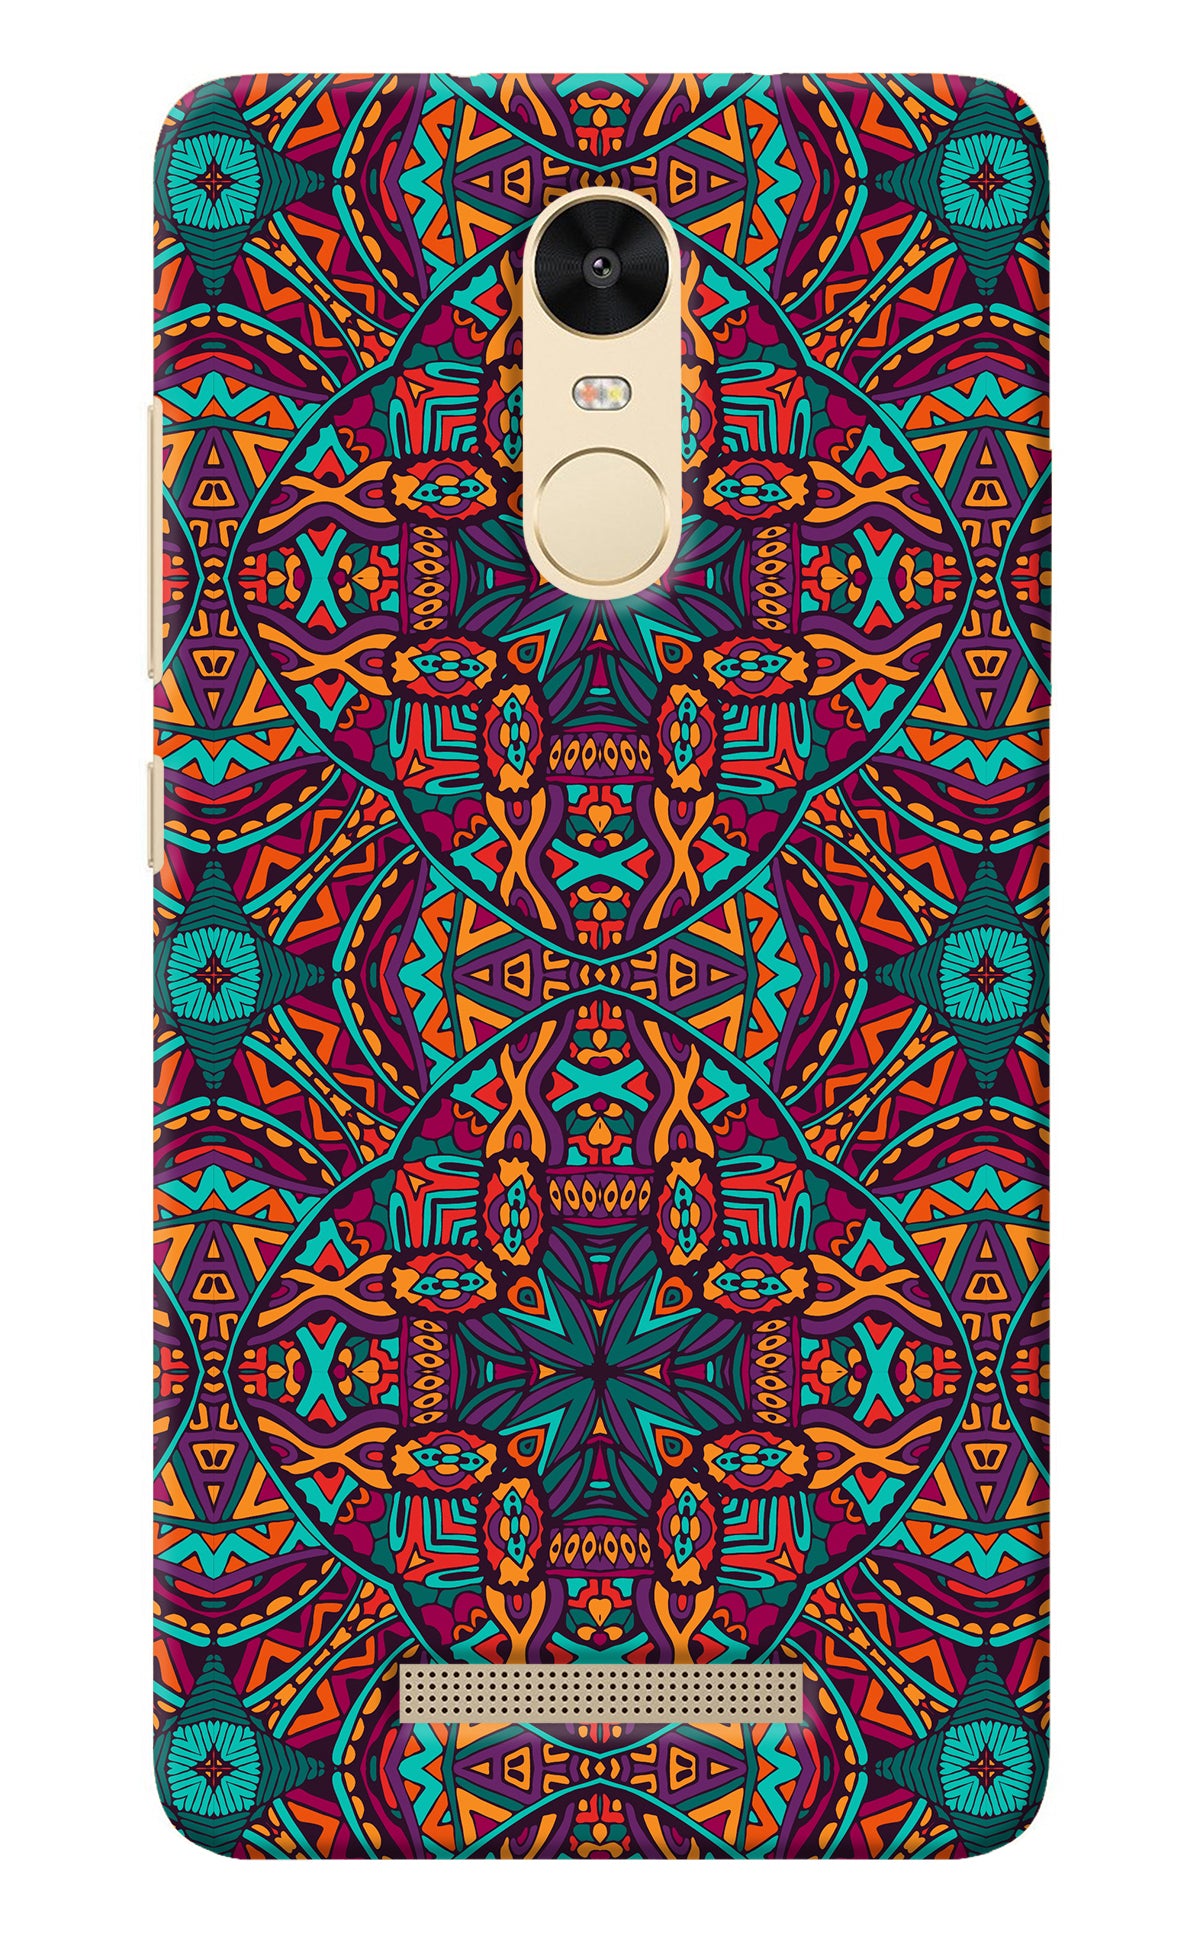 Colour Mandala Redmi Note 3 Back Cover